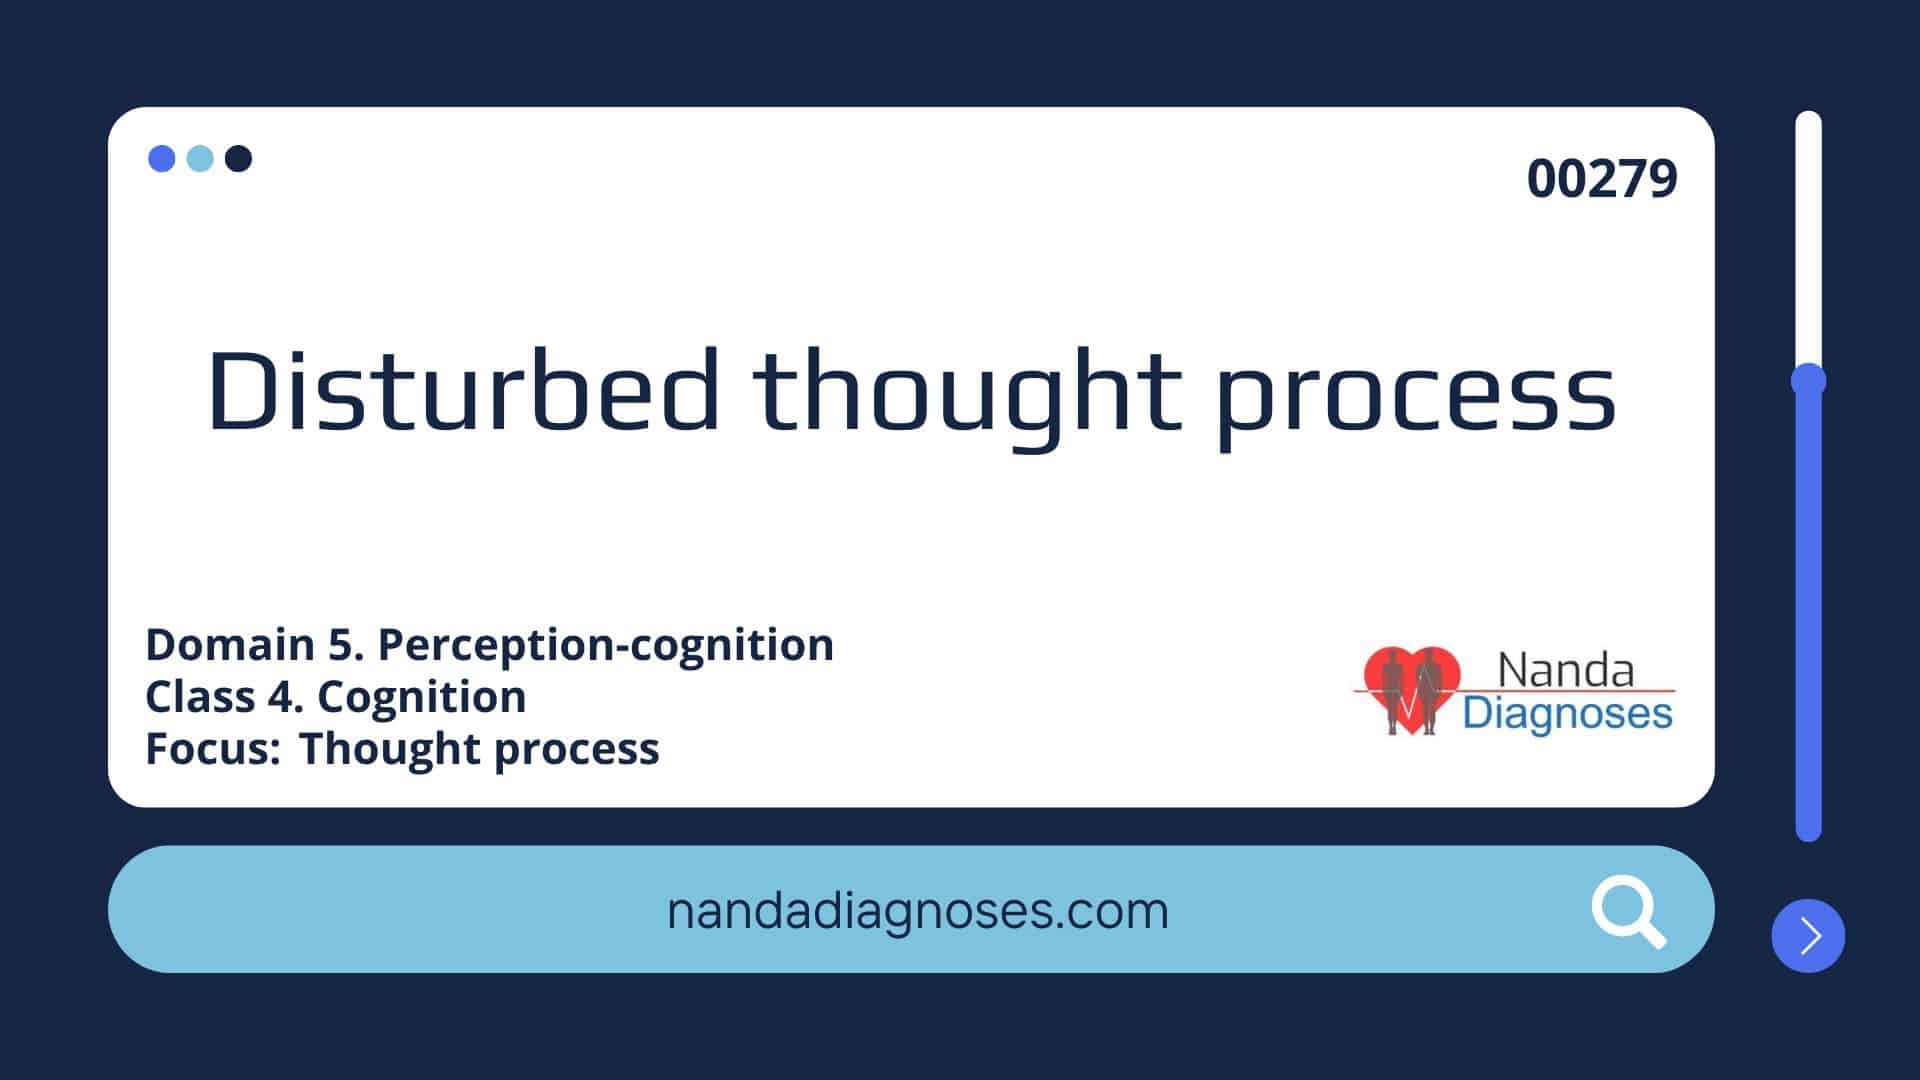 Nursing diagnosis Disturbed thought process